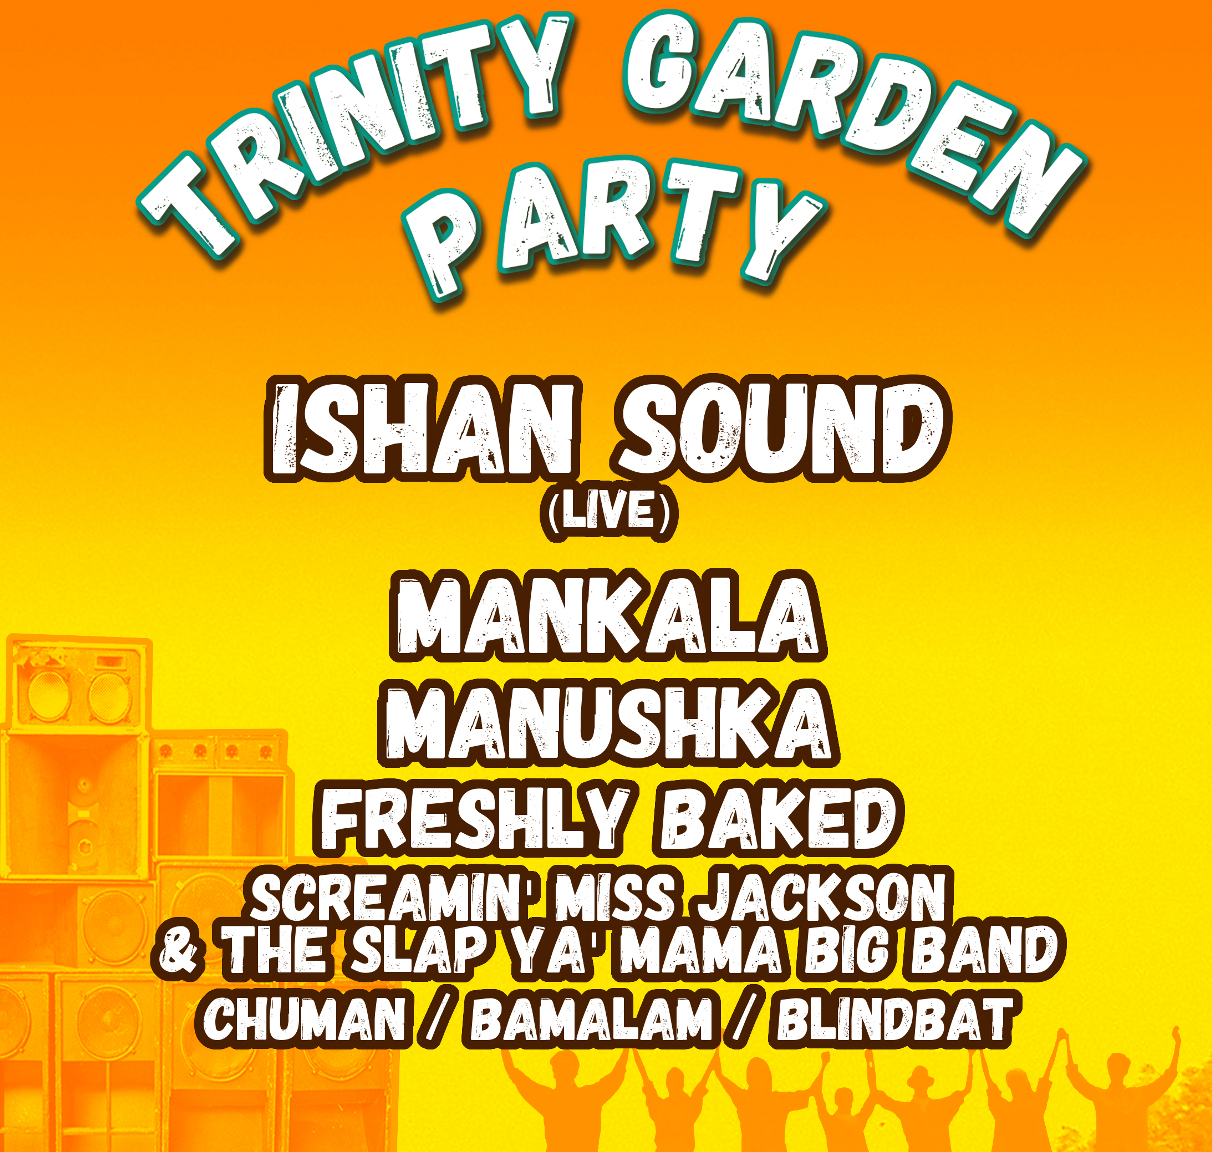 Trinity FREE Garden Party